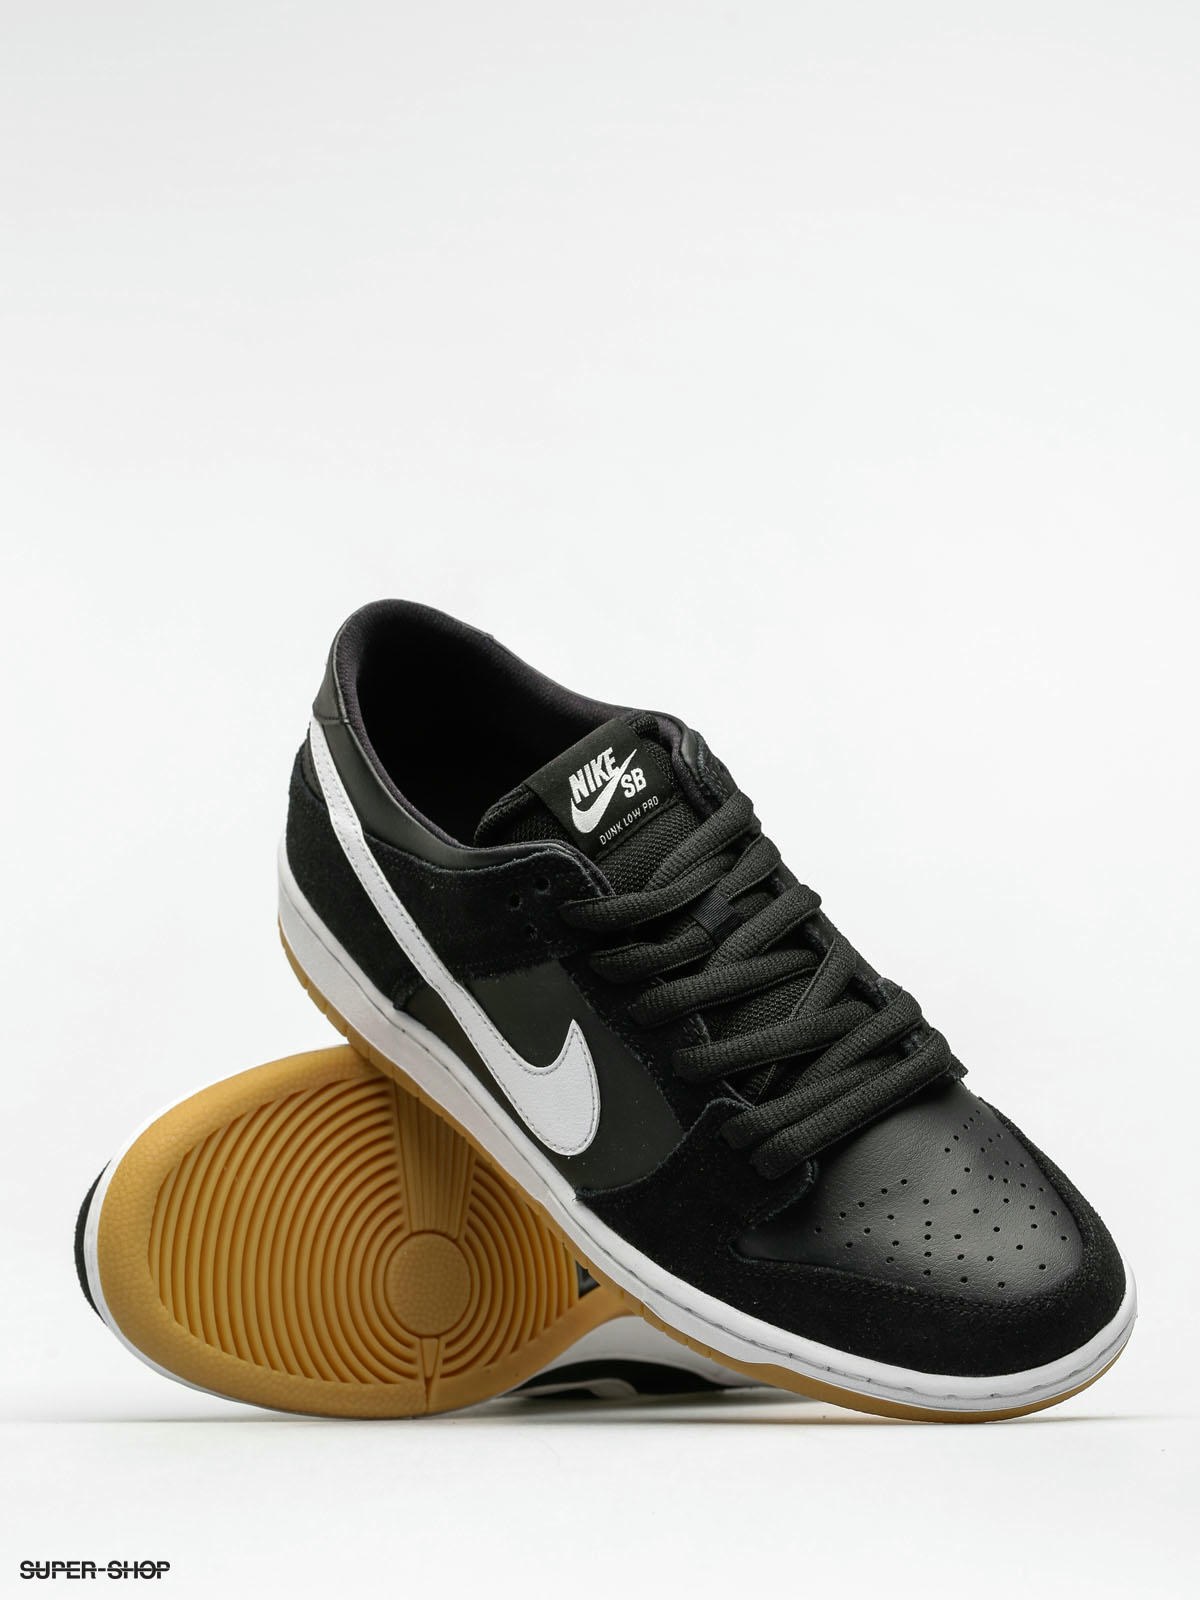 Nike SB Dunk Low Pro Shoes - Black / White - Black - Gum Light Brown